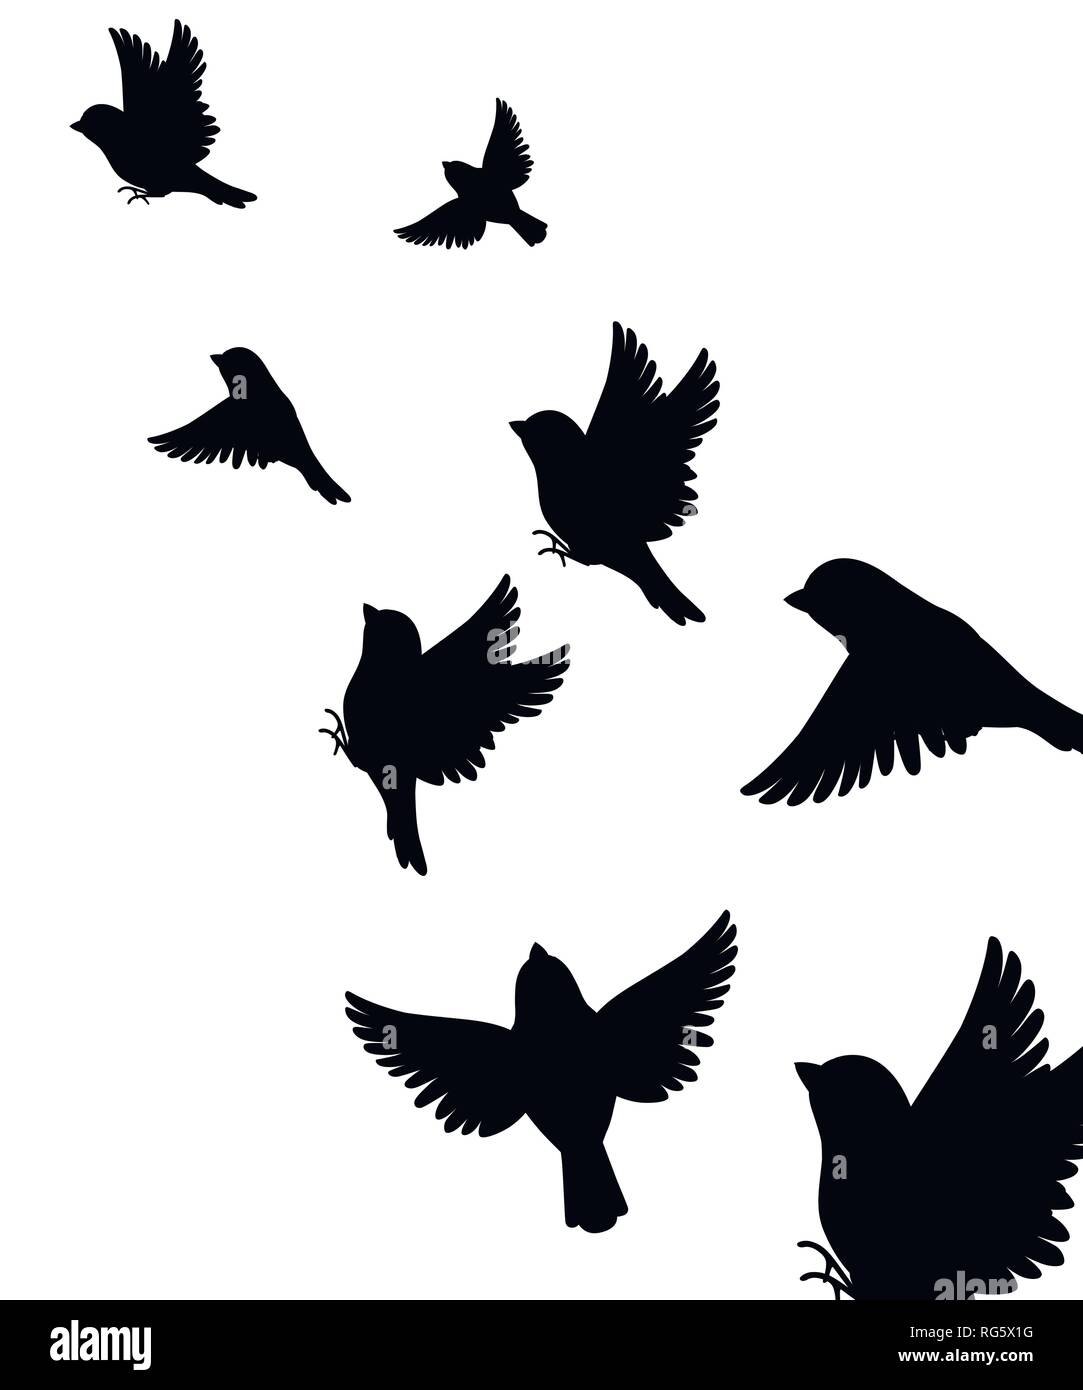 Aves volando silueta Imágenes recortadas de stock - Alamy